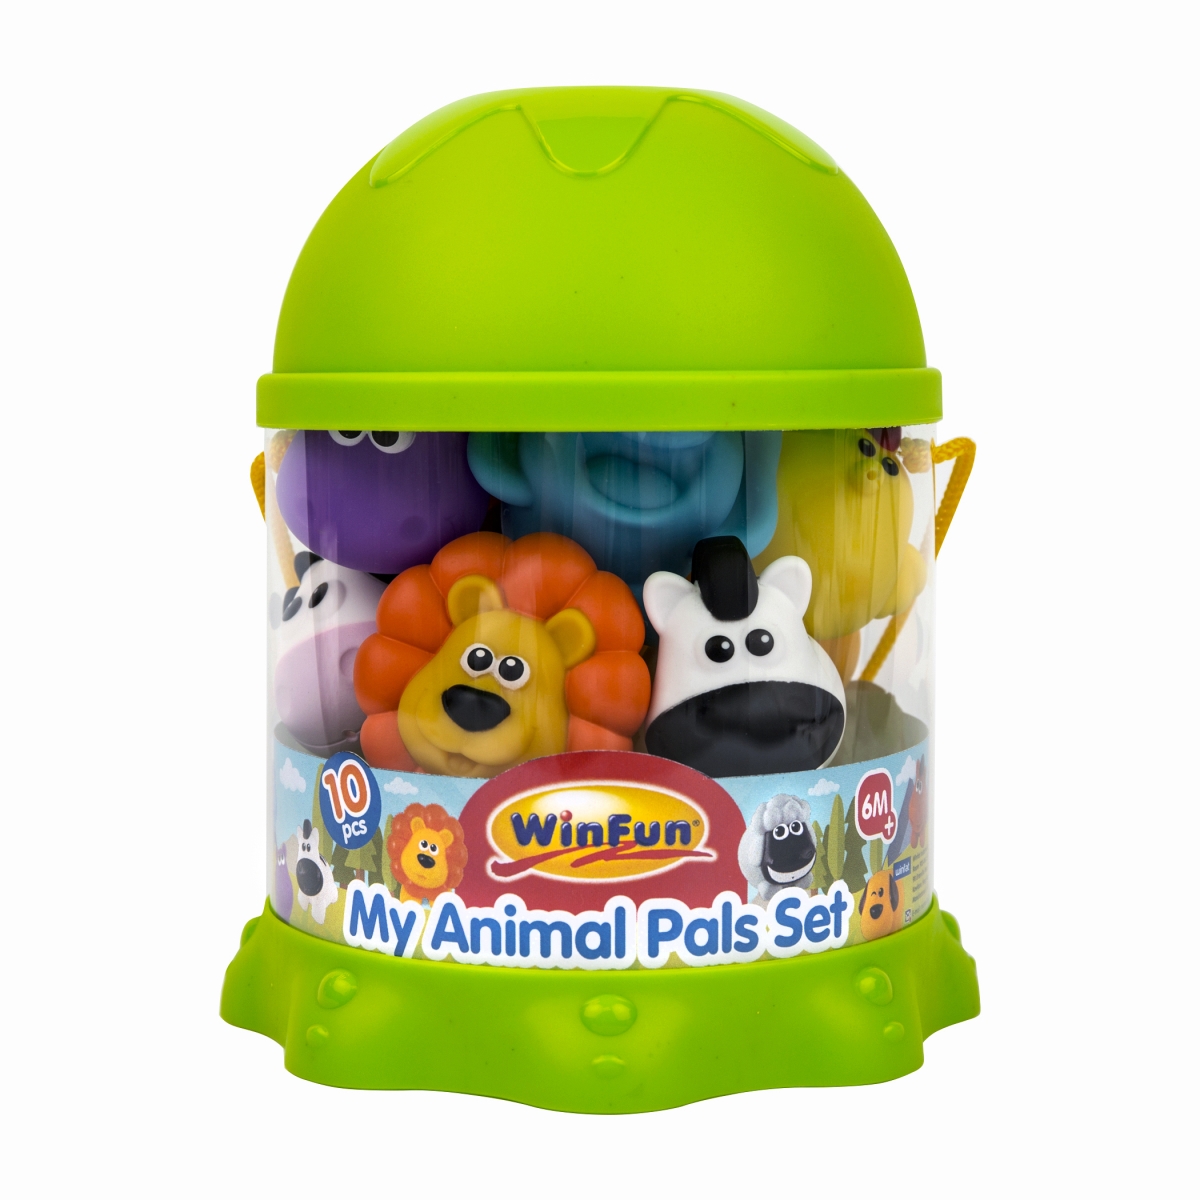 1310 My Animals Bath Playset, Multi Color - 10 Piece